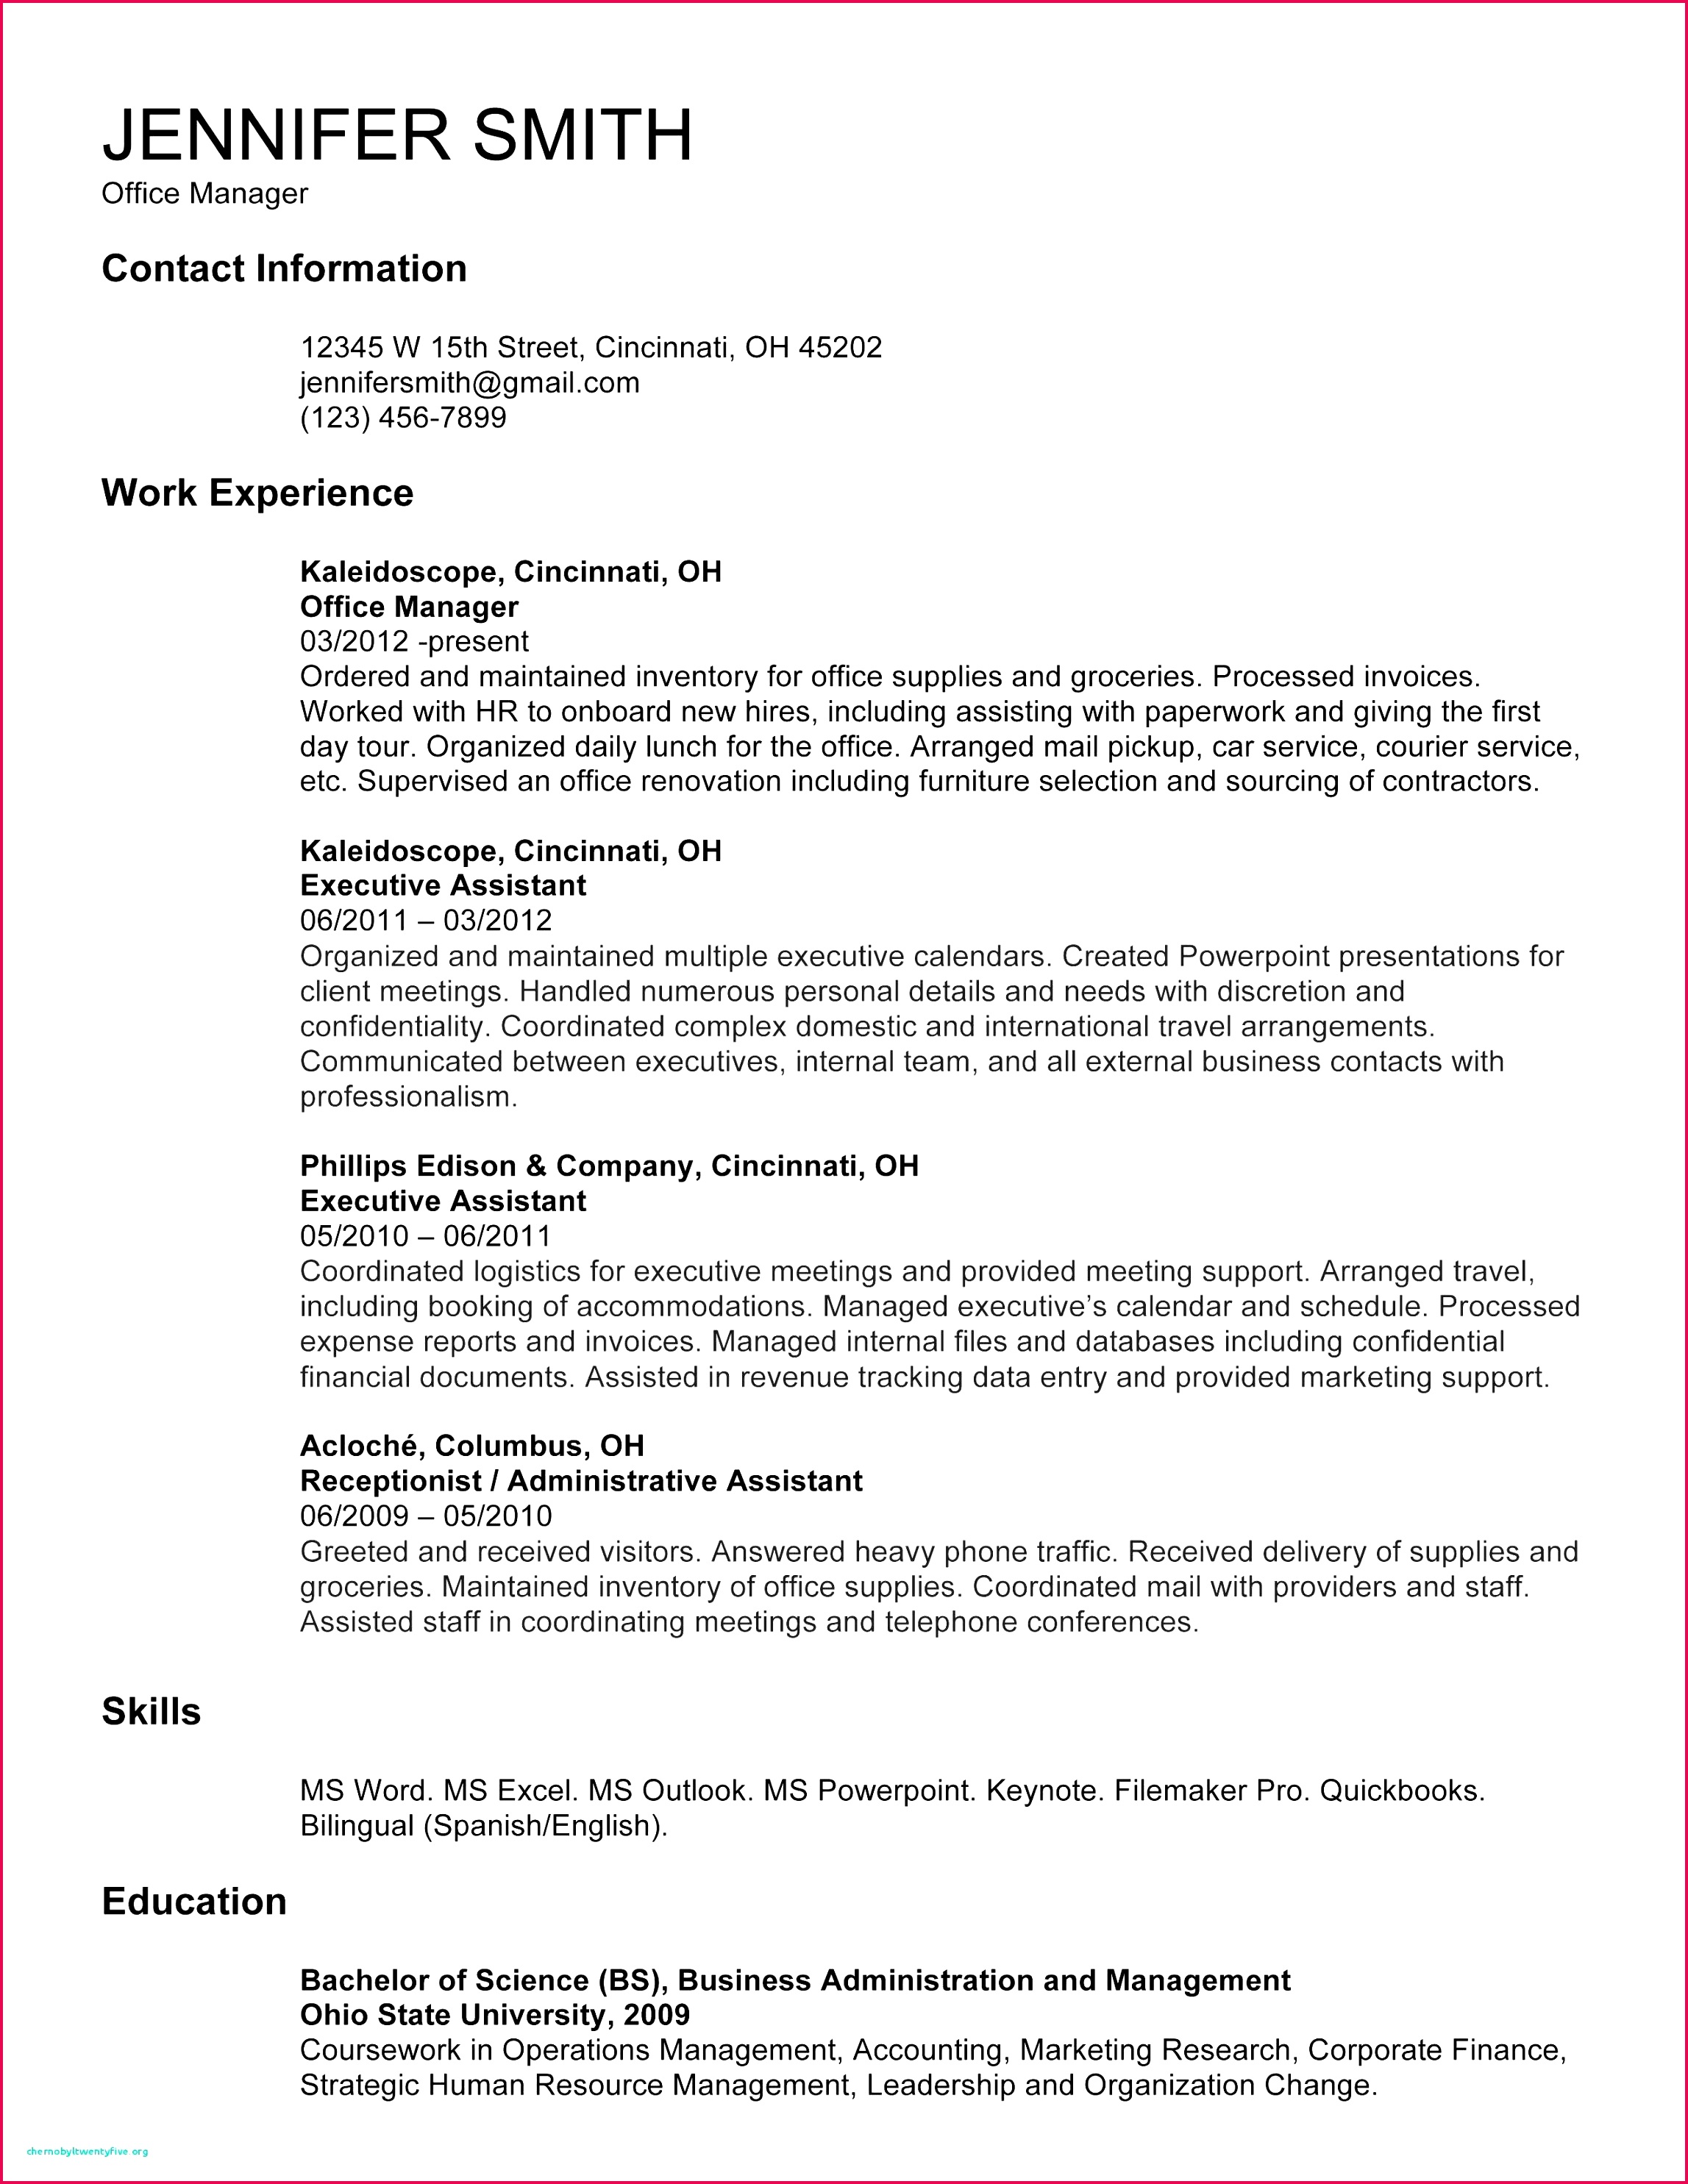 resume format website unique birth certificate maker sample design free best turabian template 0d of resume format website